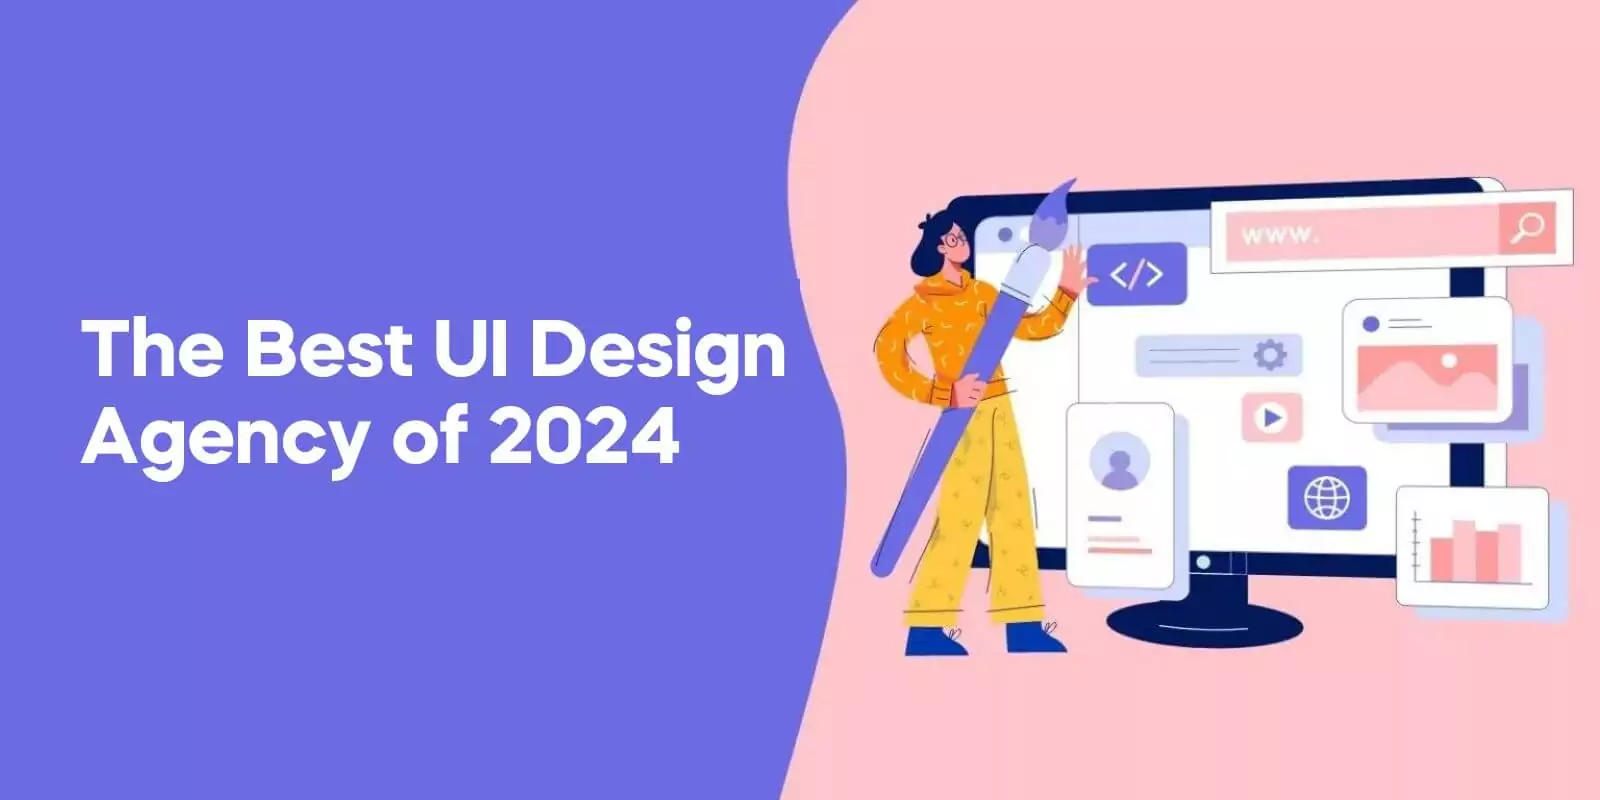 The Best UI Design Agency of 2024